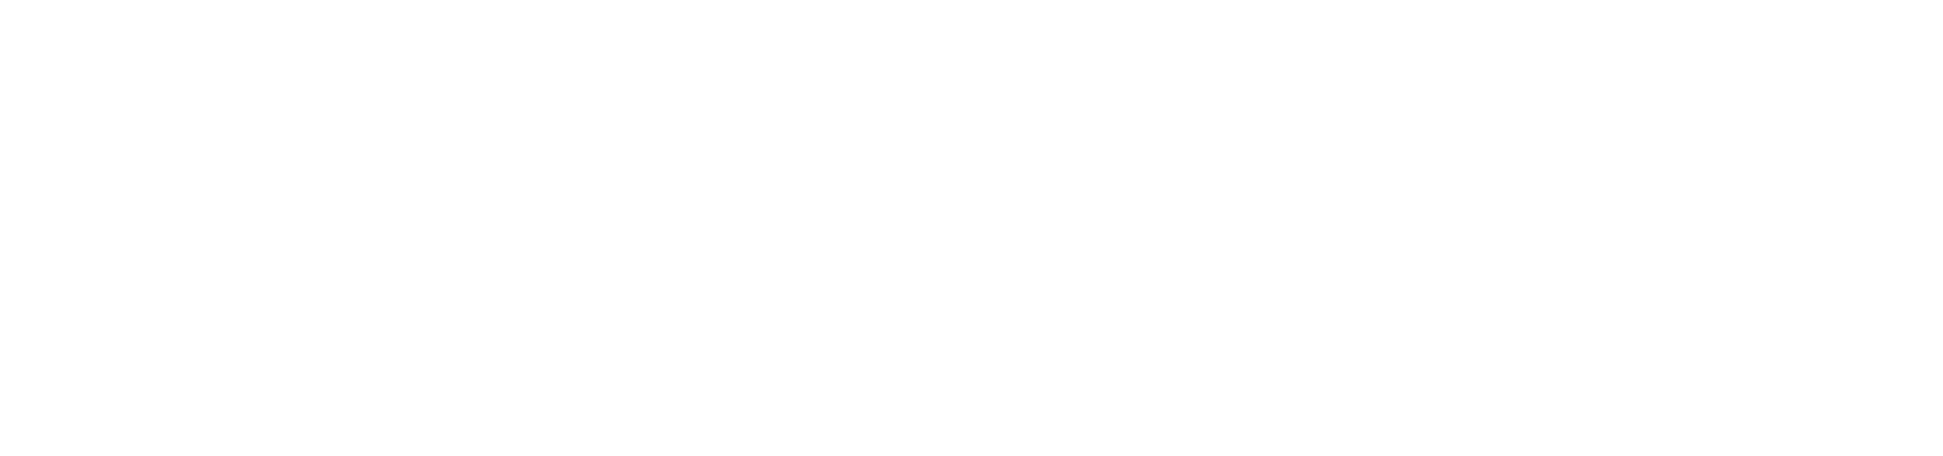 Devon Logo - Home